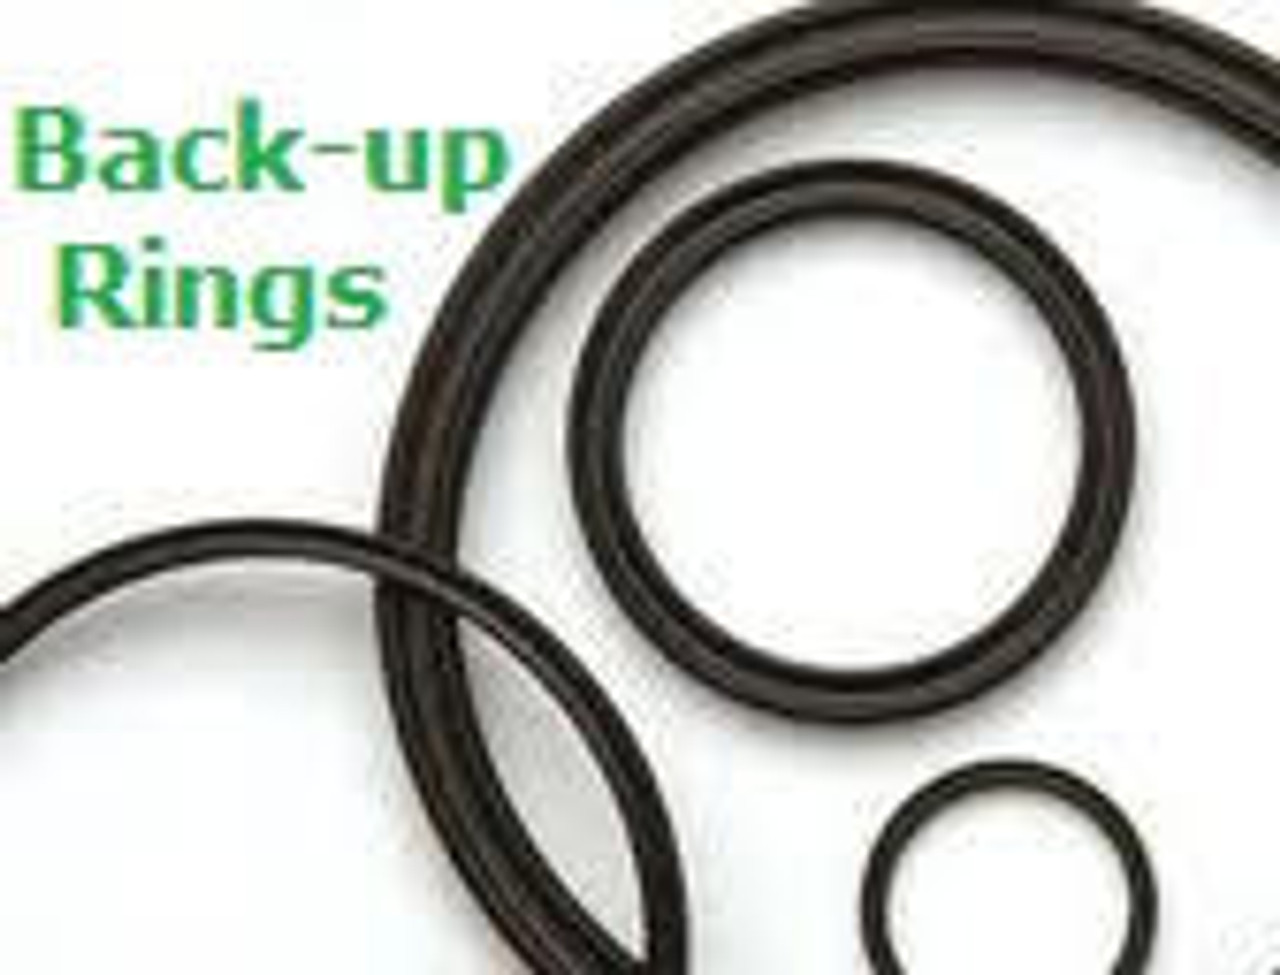 Backup Rings Buna Size 364 Price for 1 pc